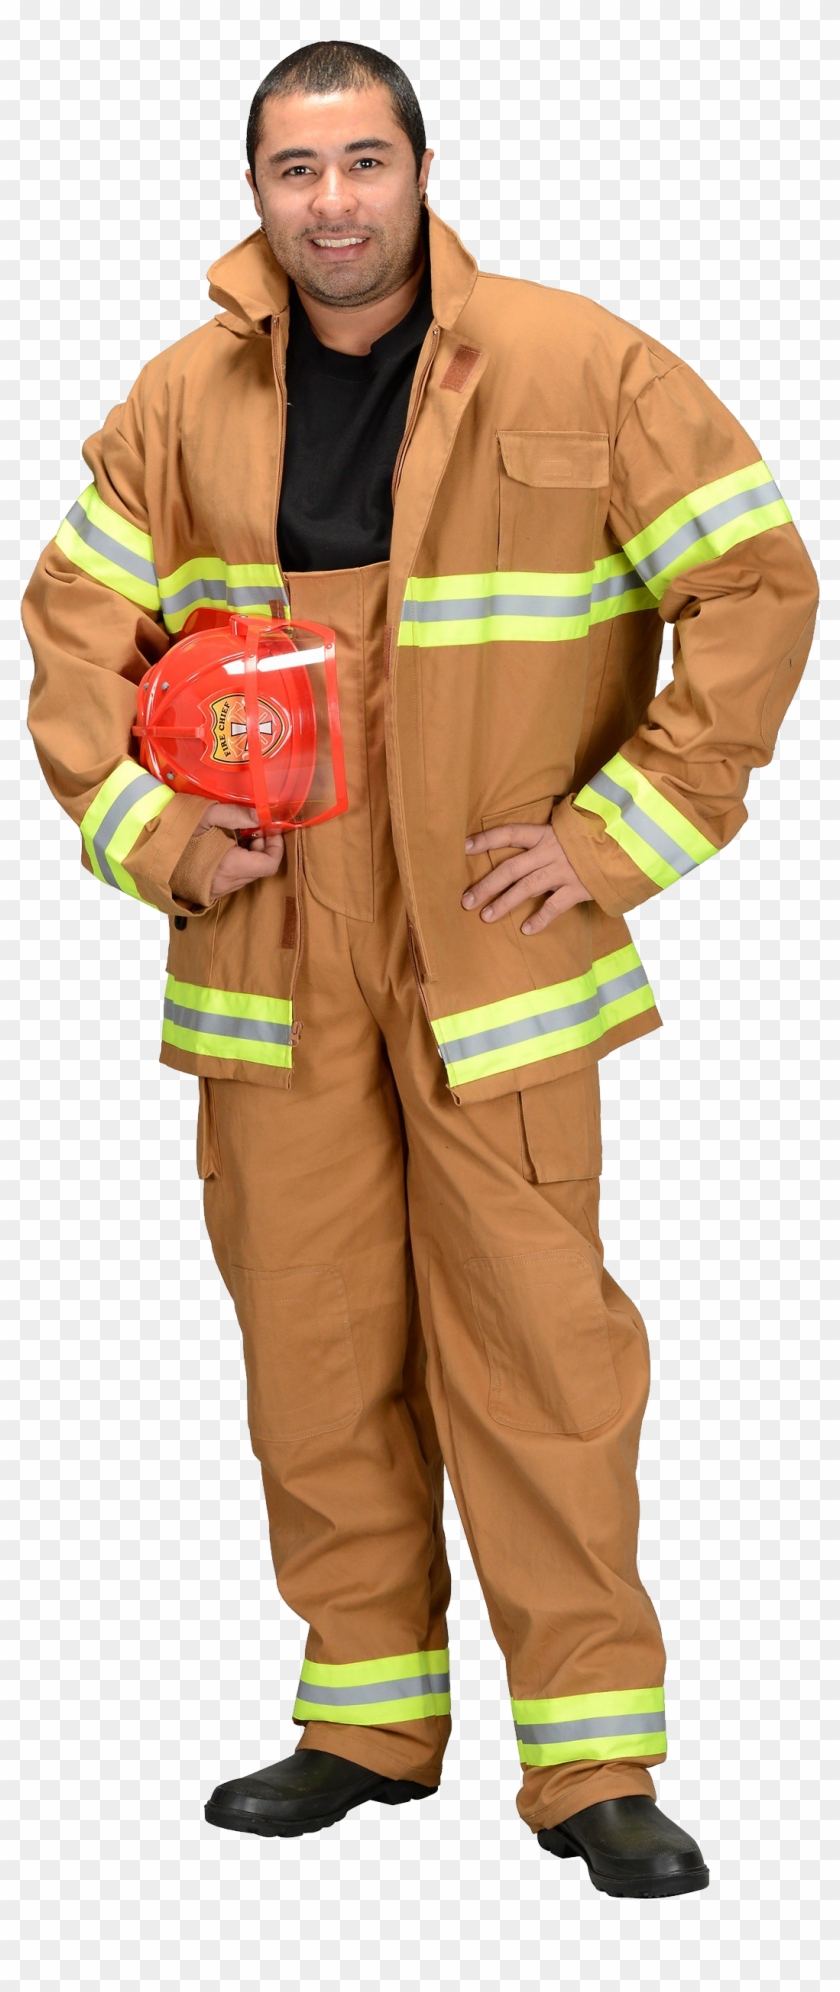 Firefighter - Adult Firefighter Costume #1006057